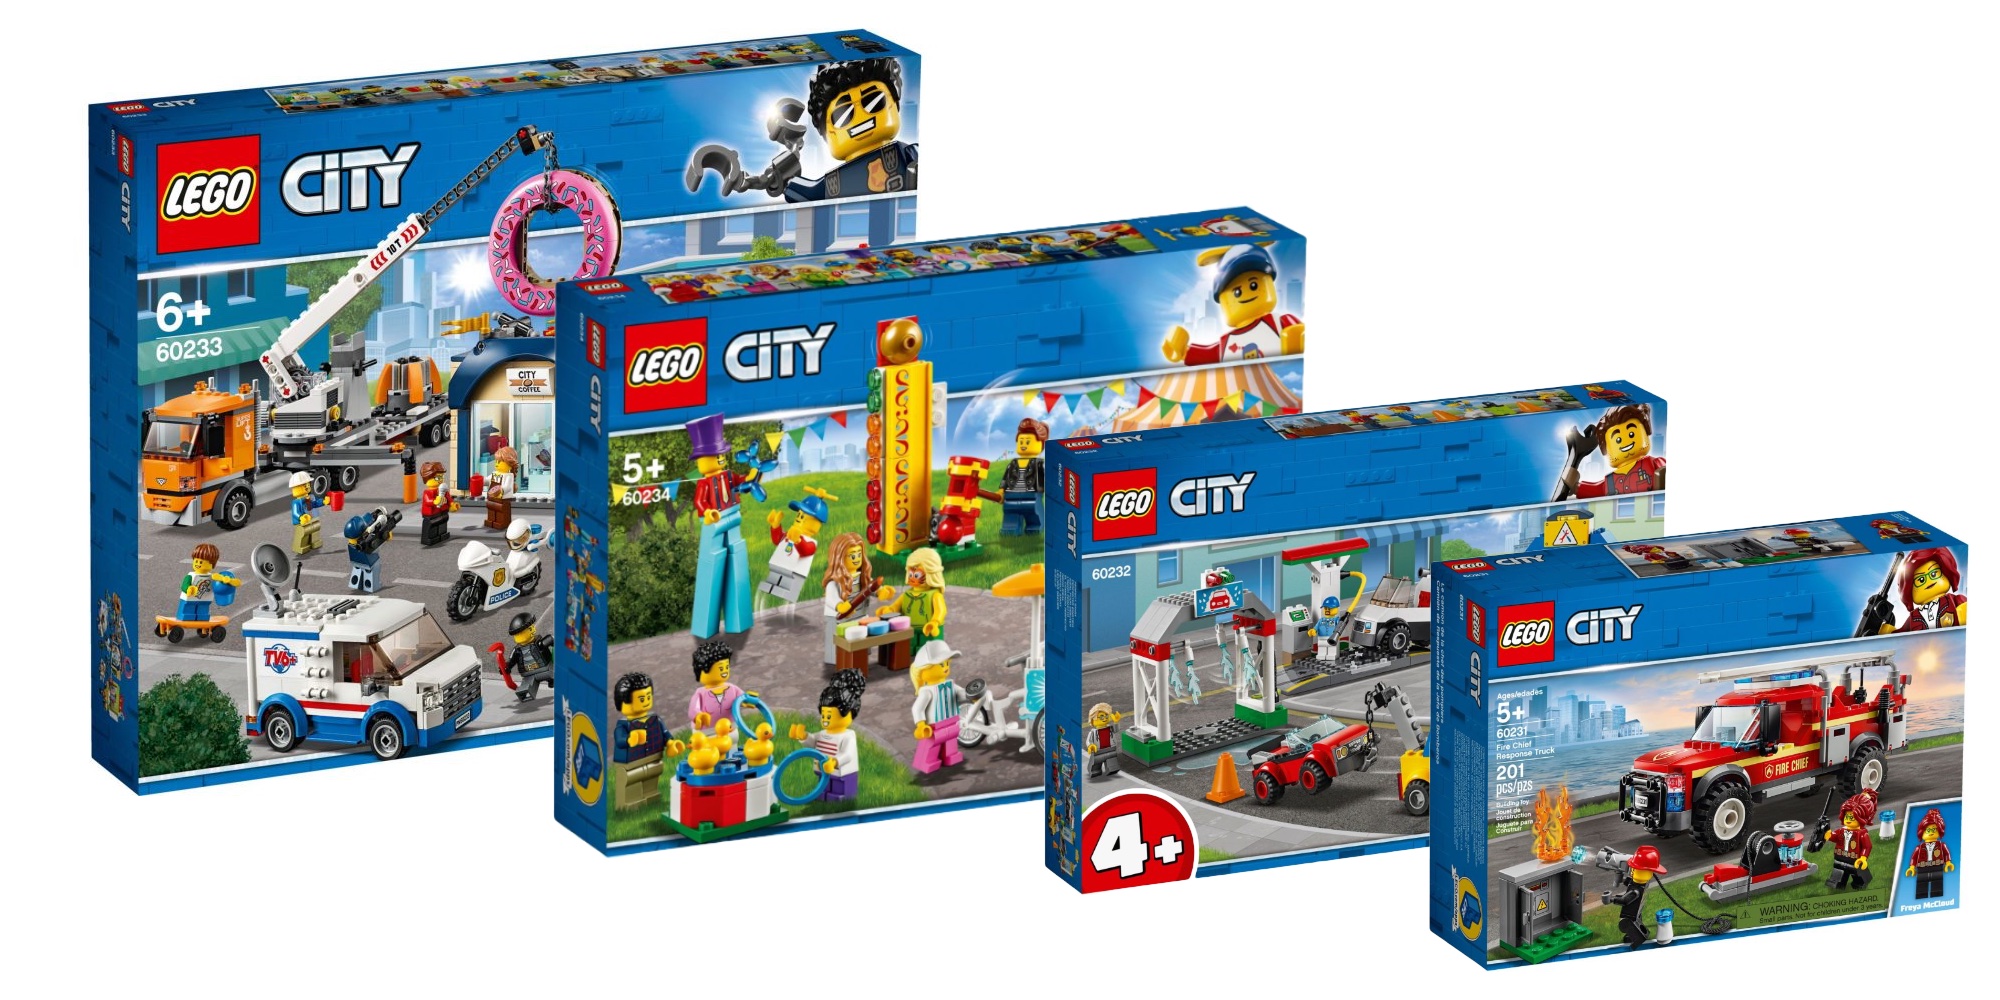 LEGO Summer City kits launch alongide new Braille bricks 9to5Toys